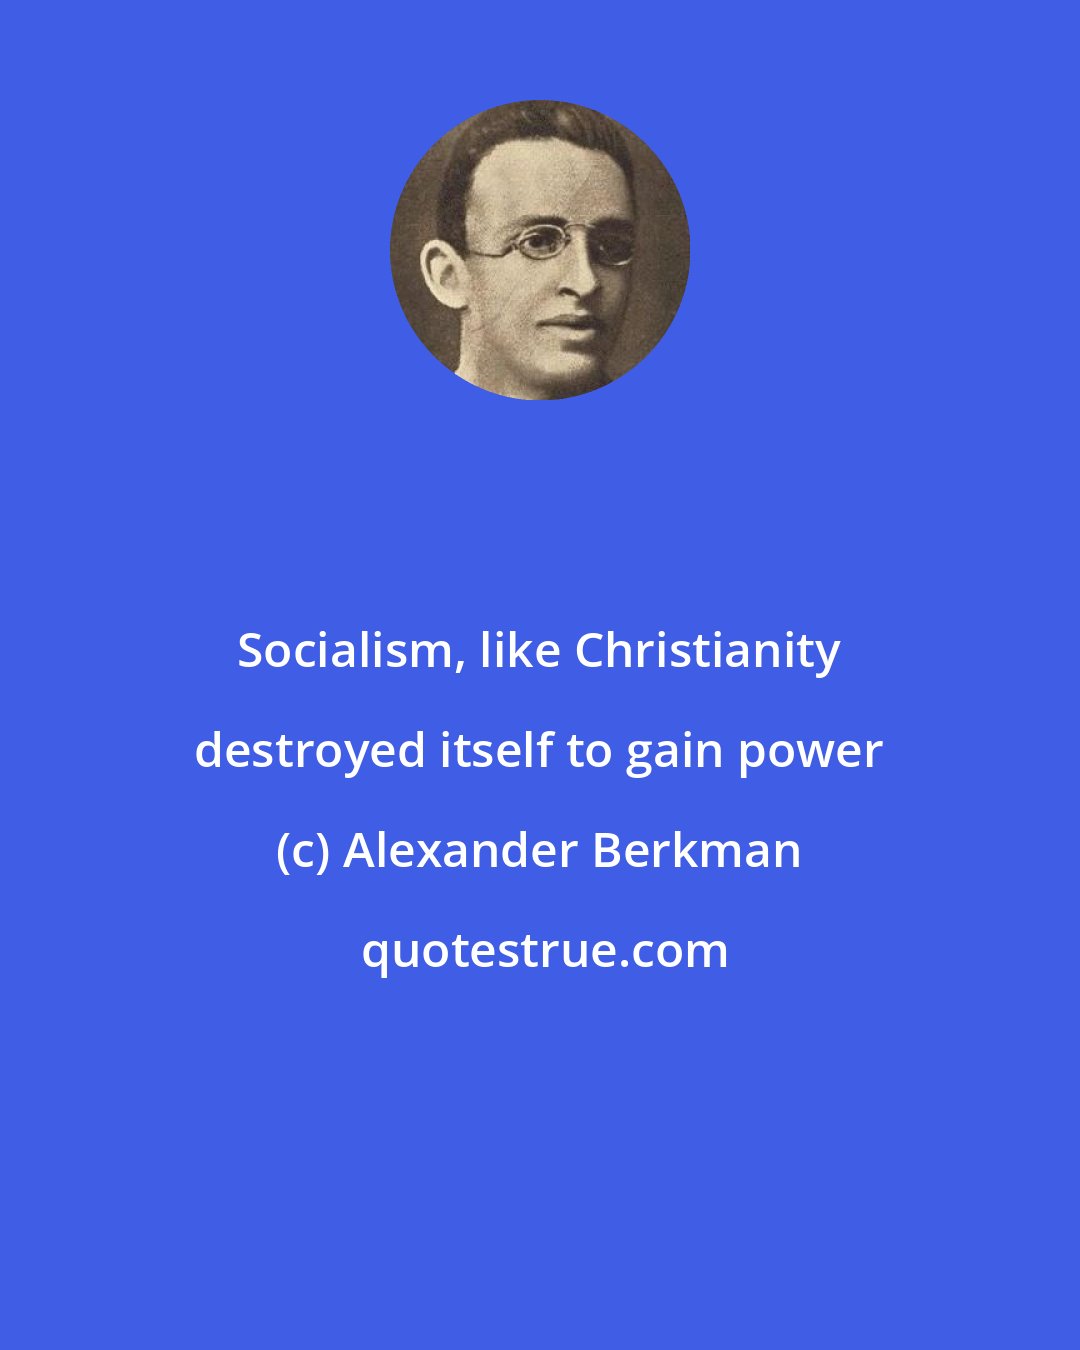 Alexander Berkman: Socialism, like Christianity destroyed itself to gain power